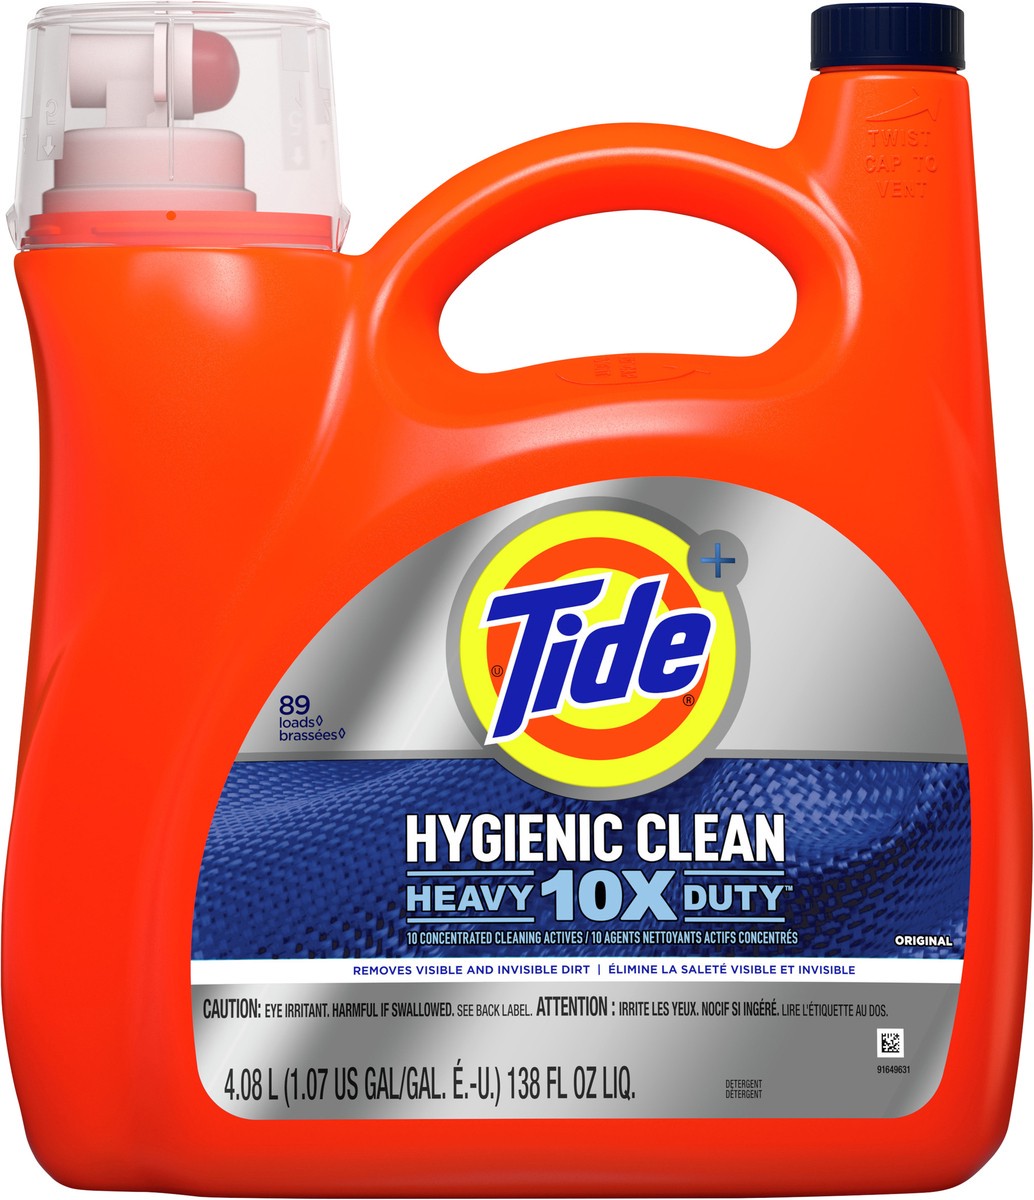 slide 4 of 6, Tide + Heavy 10X Duty Hygienic Clean Original Detergent 4.08 lt, 4.08 l